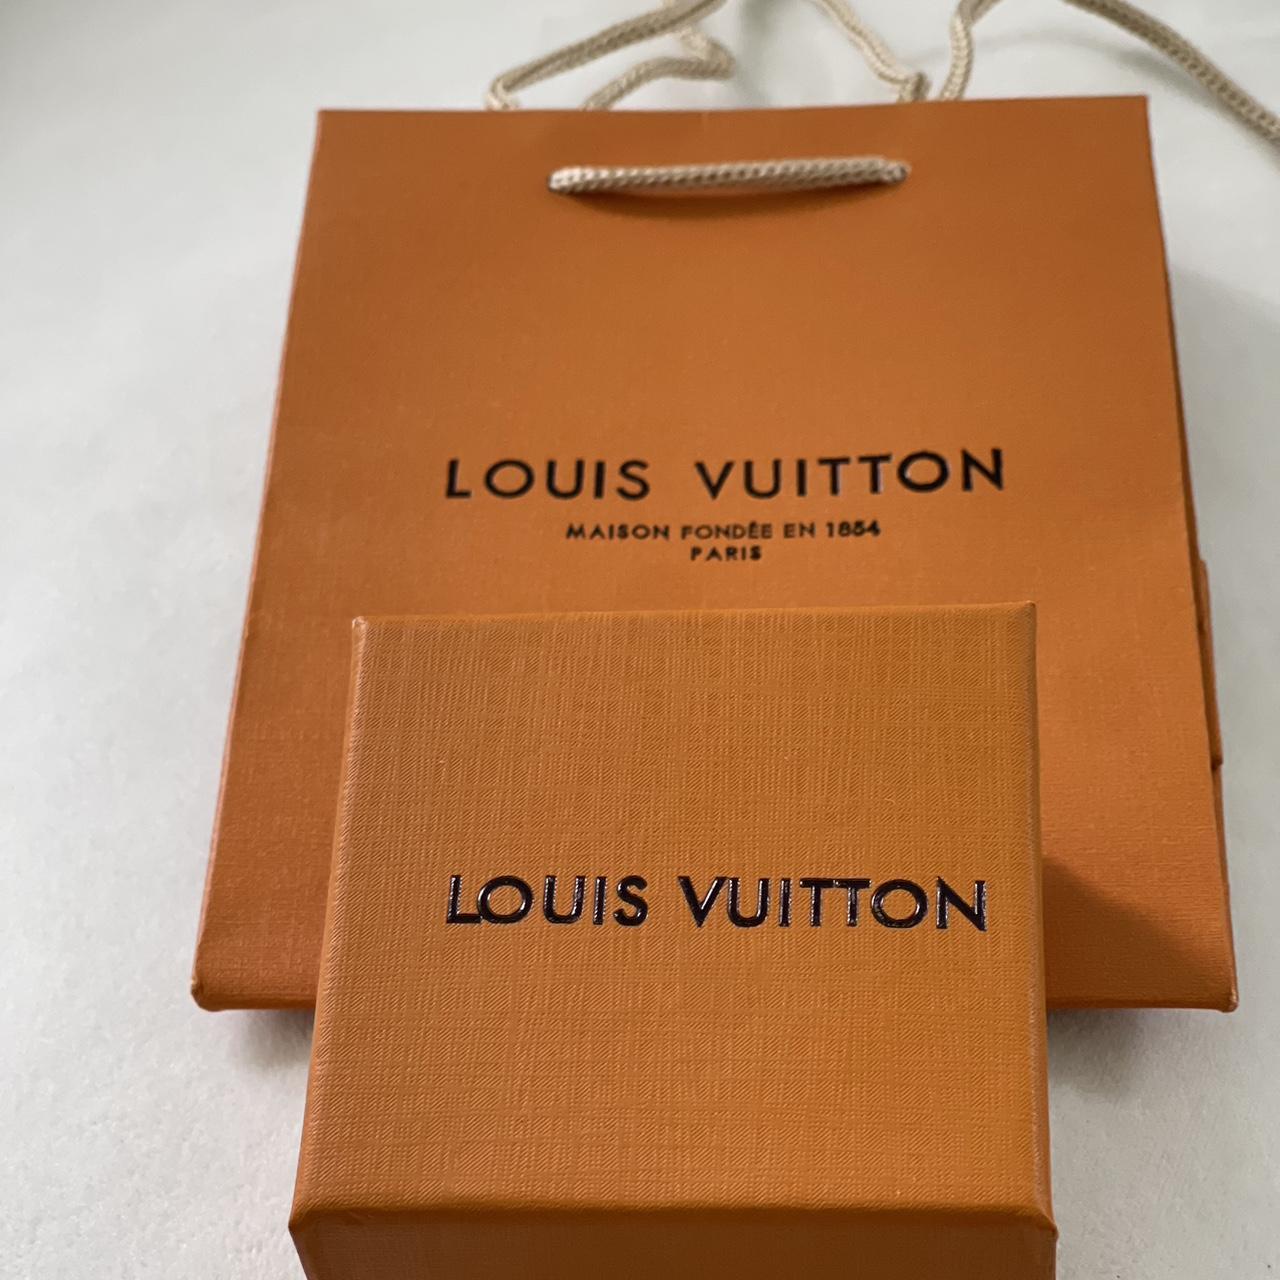 Original Louis Vuitton Purse Box and Dust - Depop